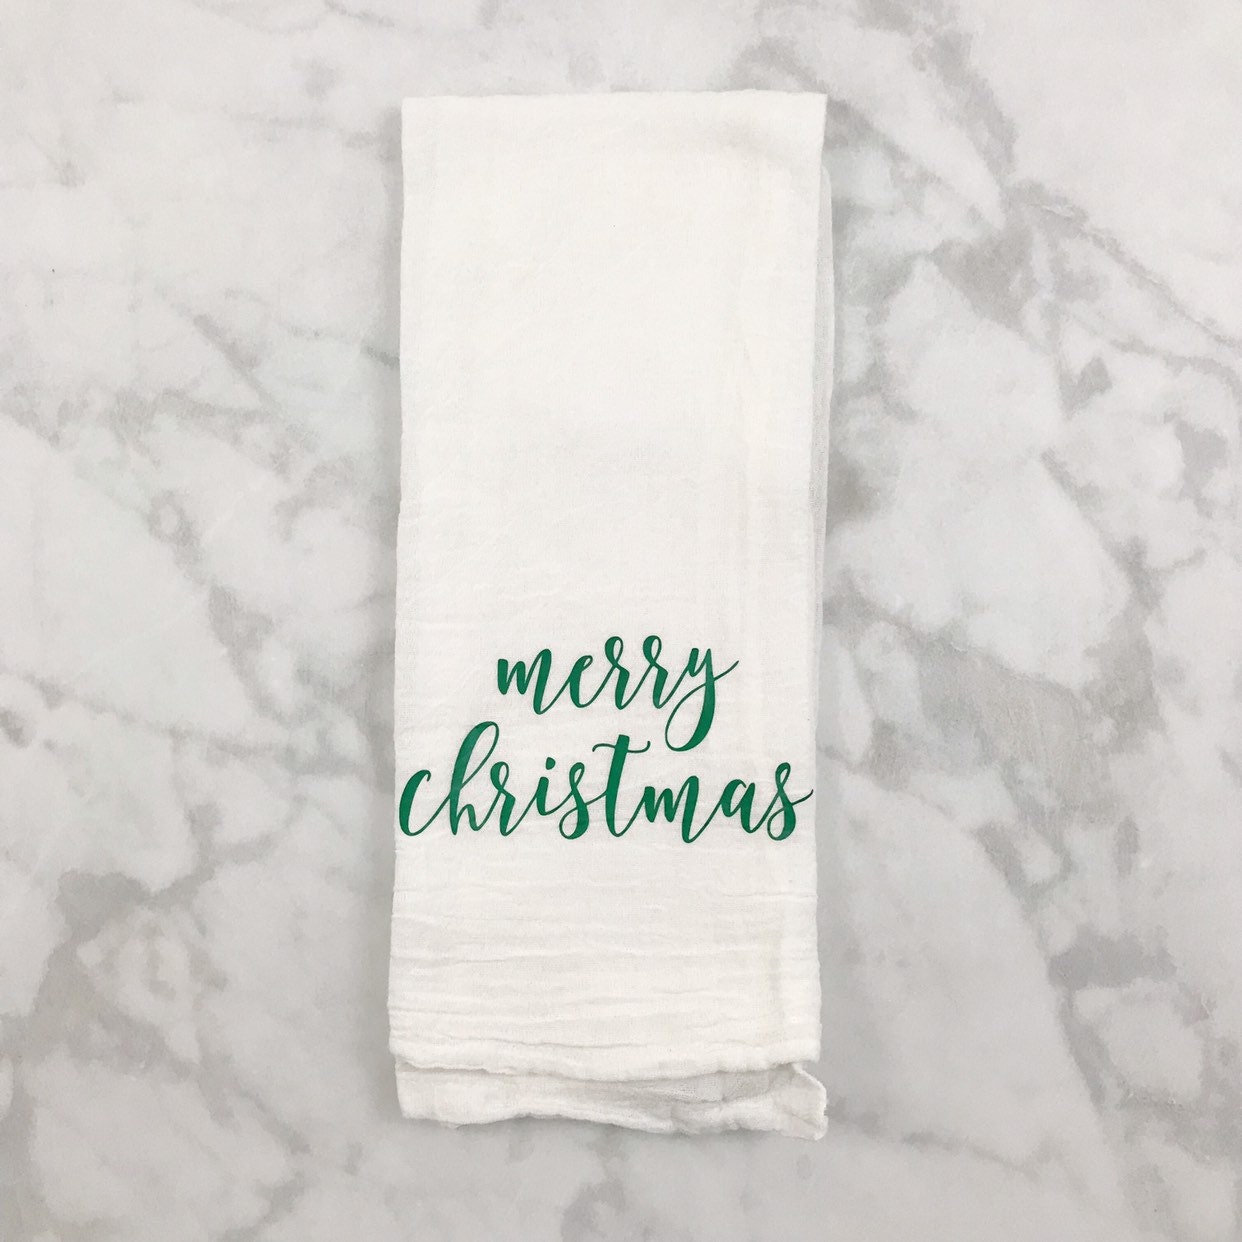 Christmas Flour Sack Towels